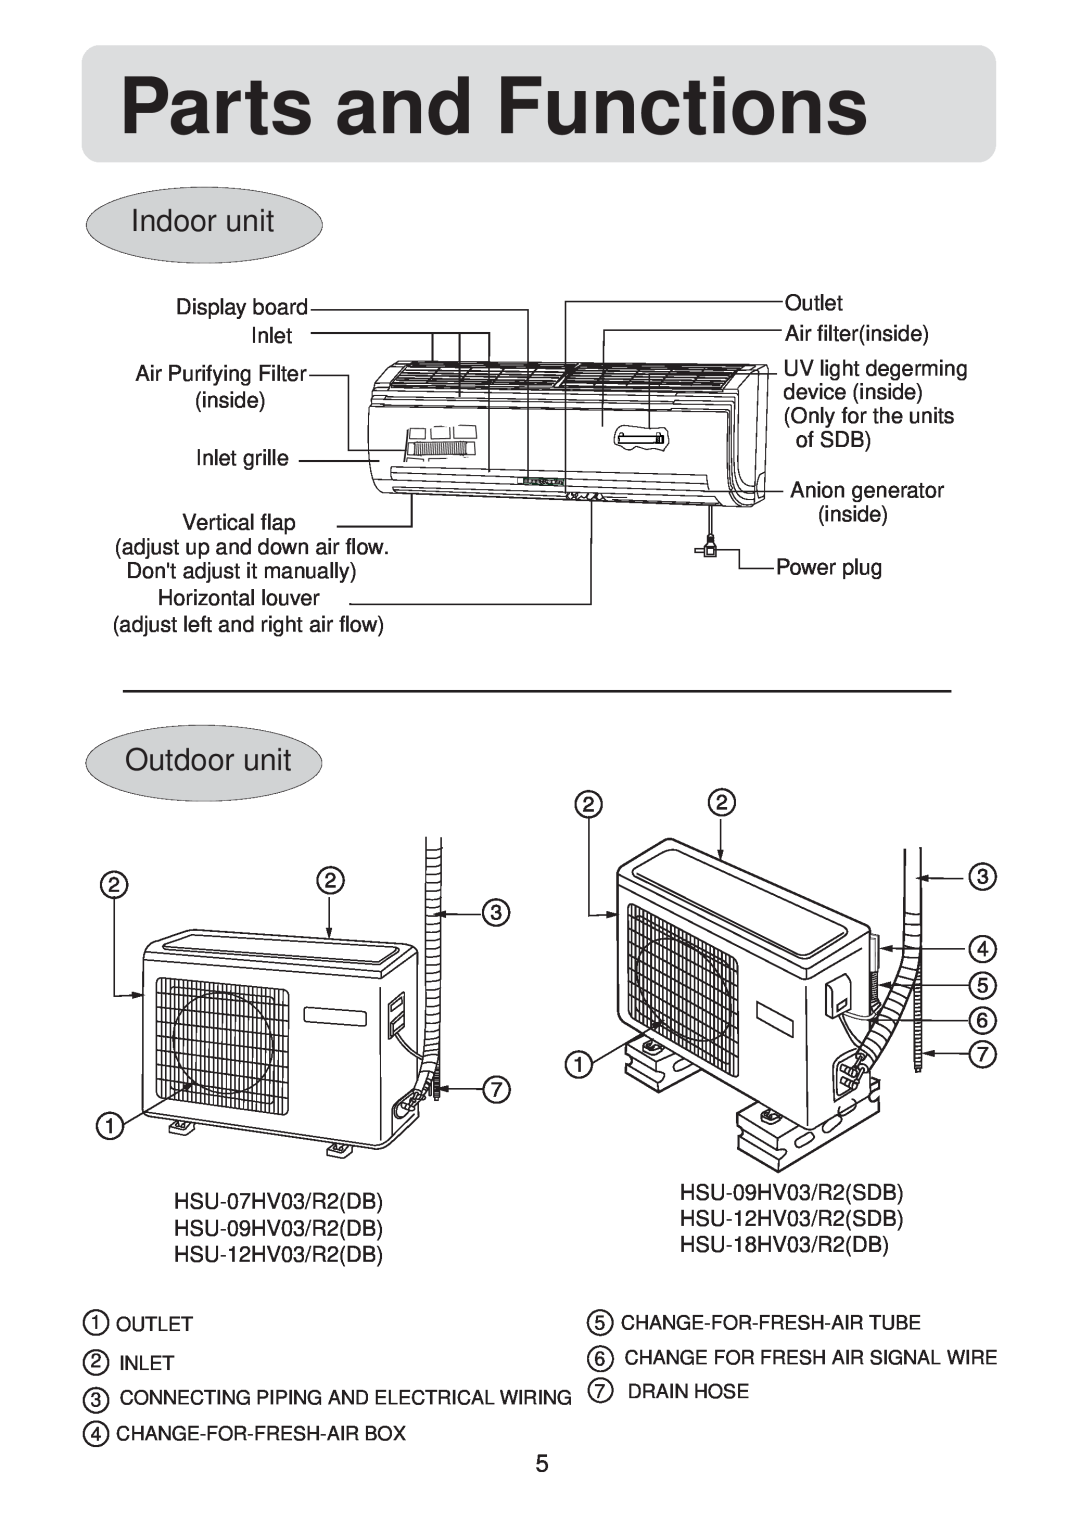 Haier HSU-09HV03/R2(SDB), HSU-12HV03/R2(SDB) operation manual Parts and Functions, Indoor unit, Outdoor unit 